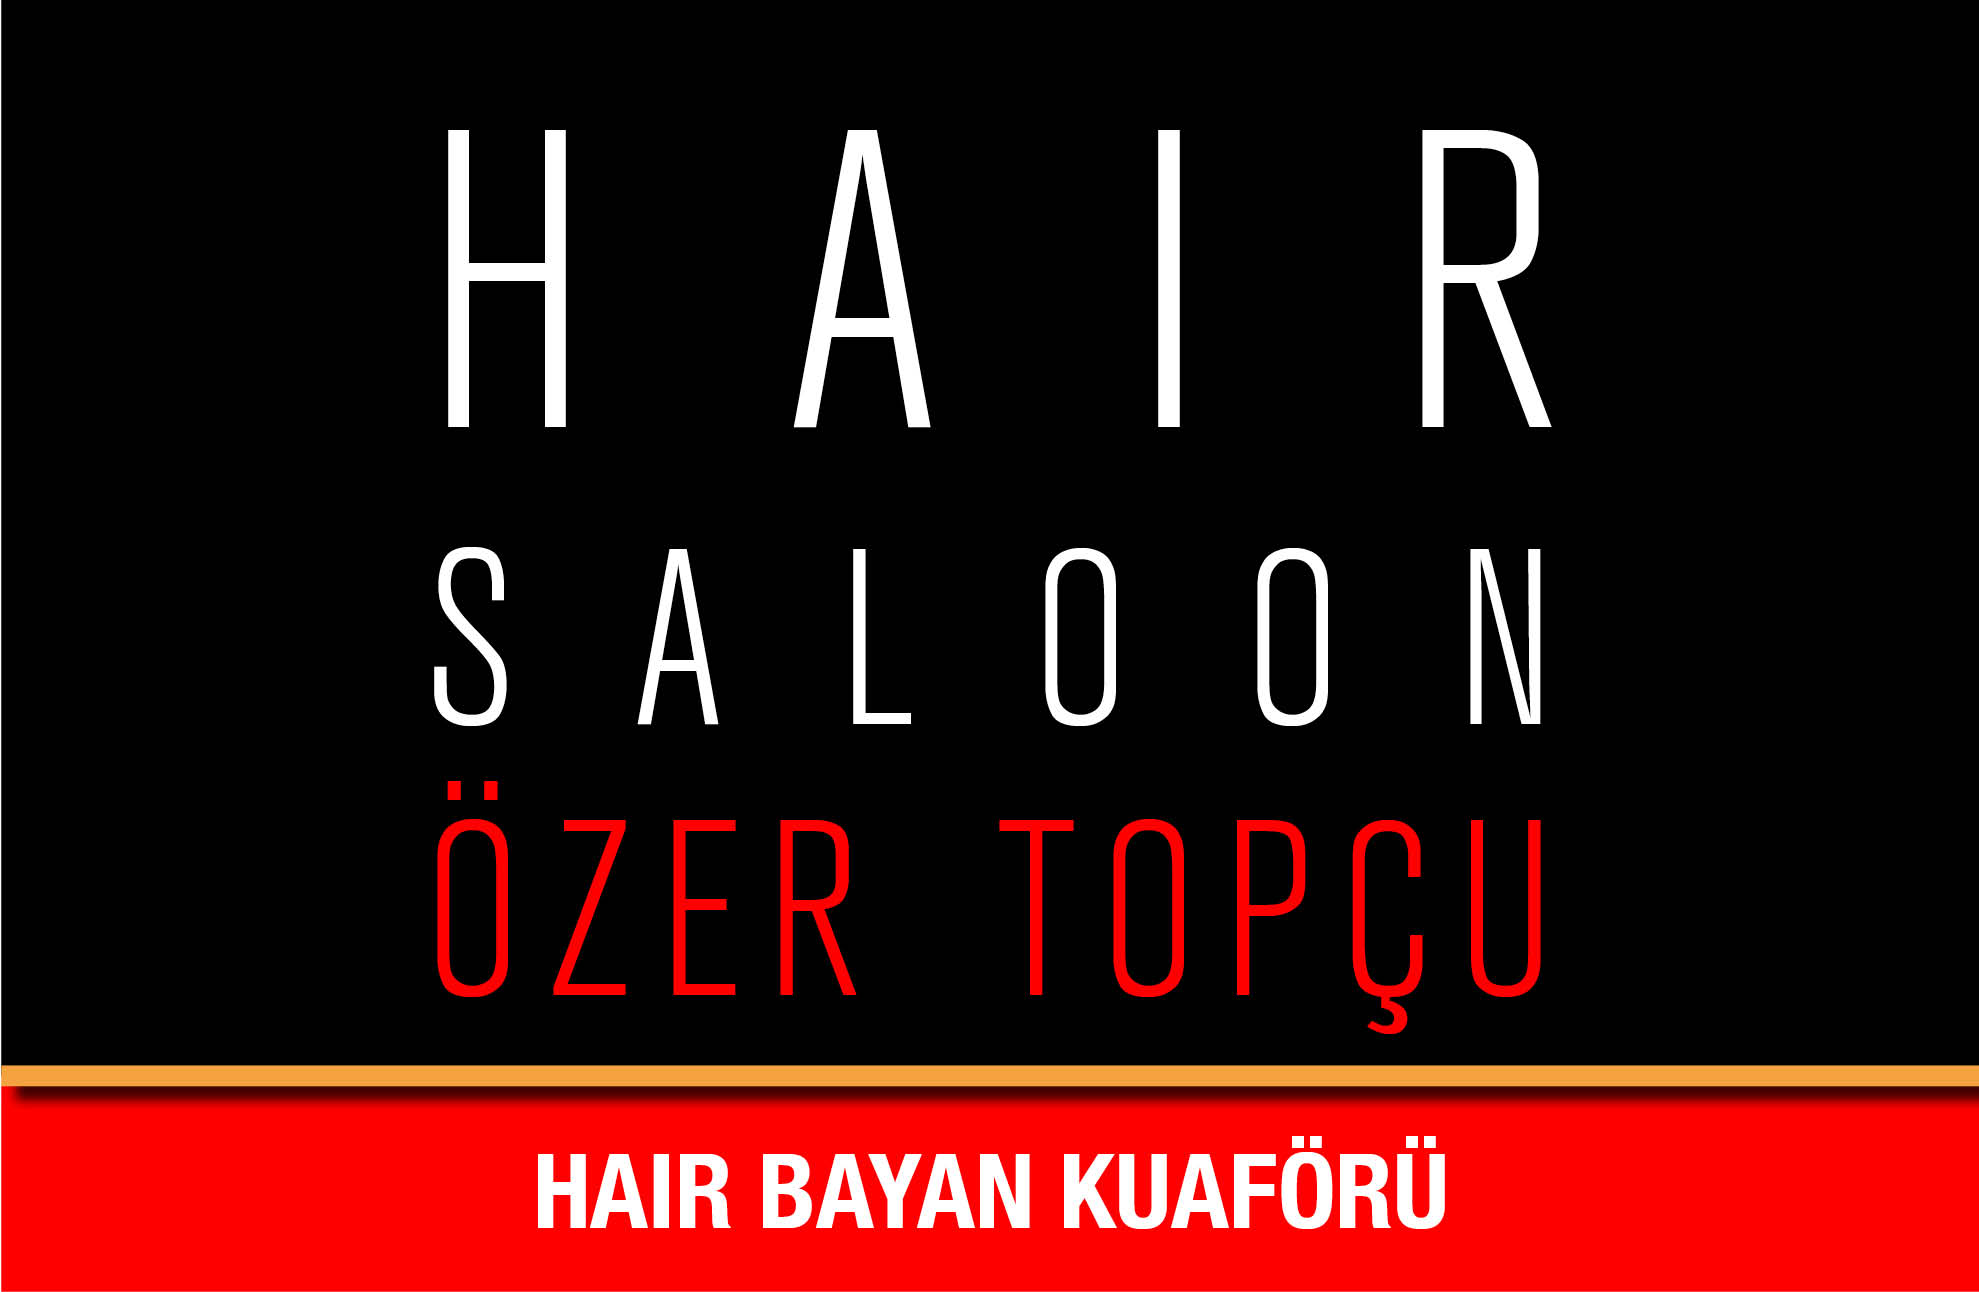 Hair Saloon Bayan Kuaförü Özer Topçu